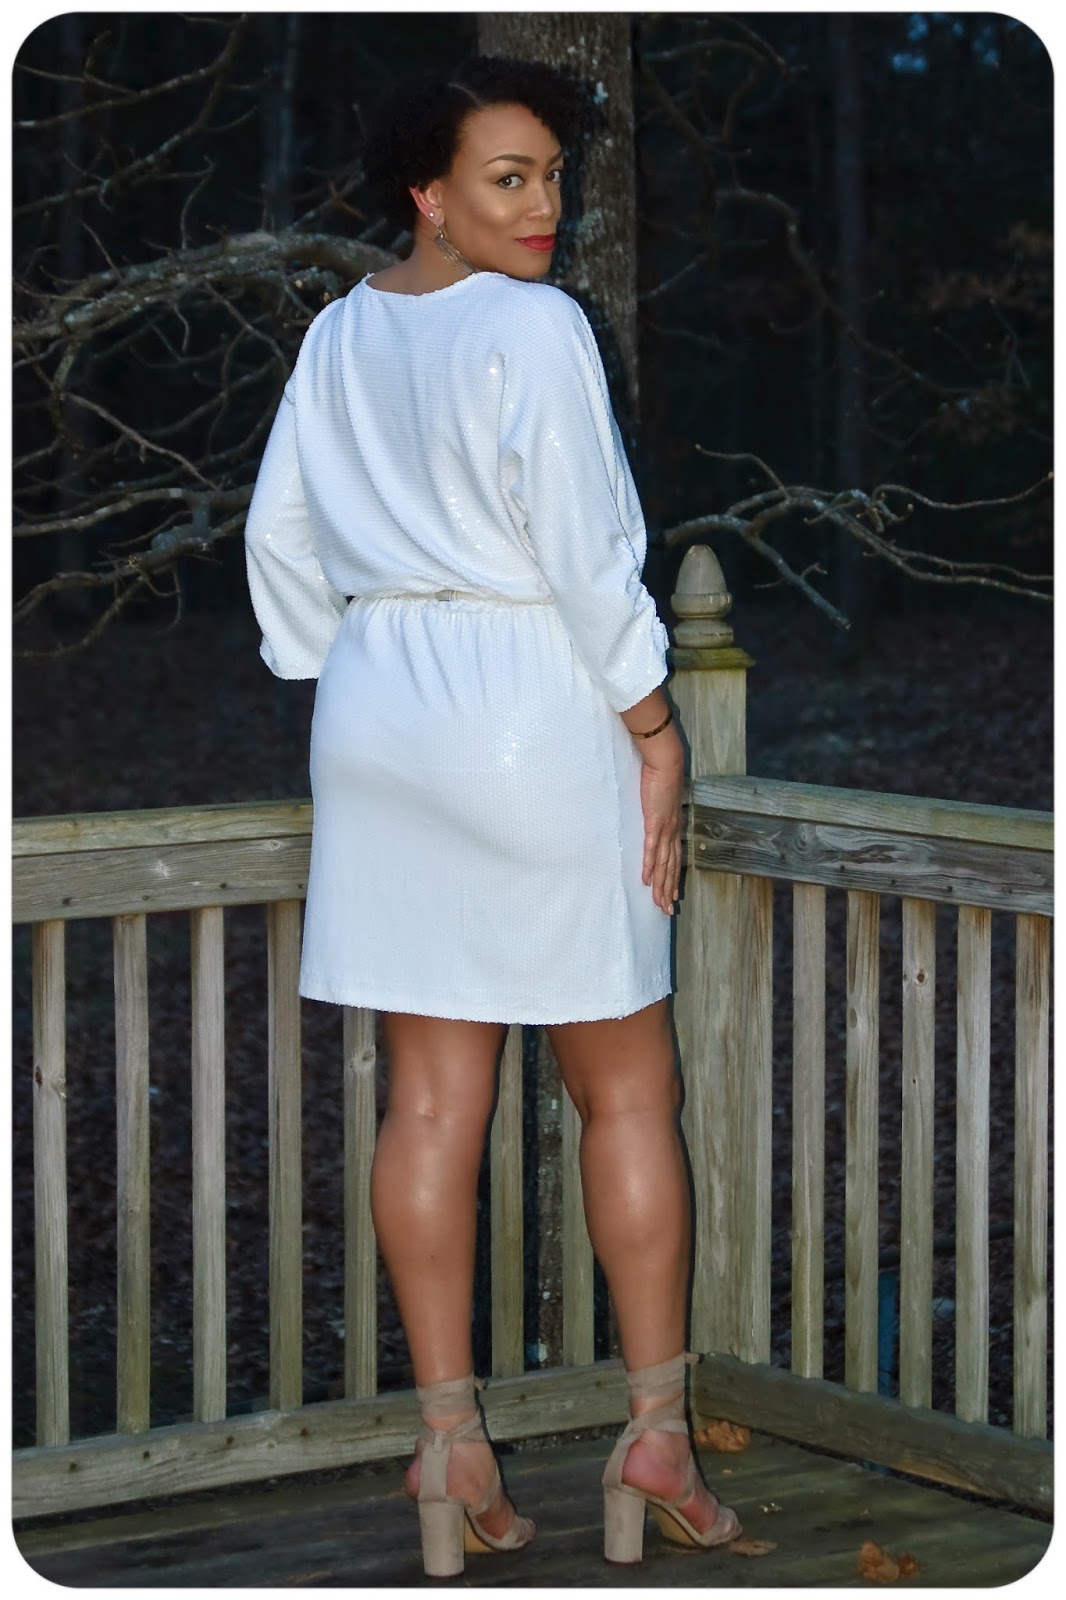 Vogue 8961 | A Little White Sequin Dress - Erica Bunker DIY Style!